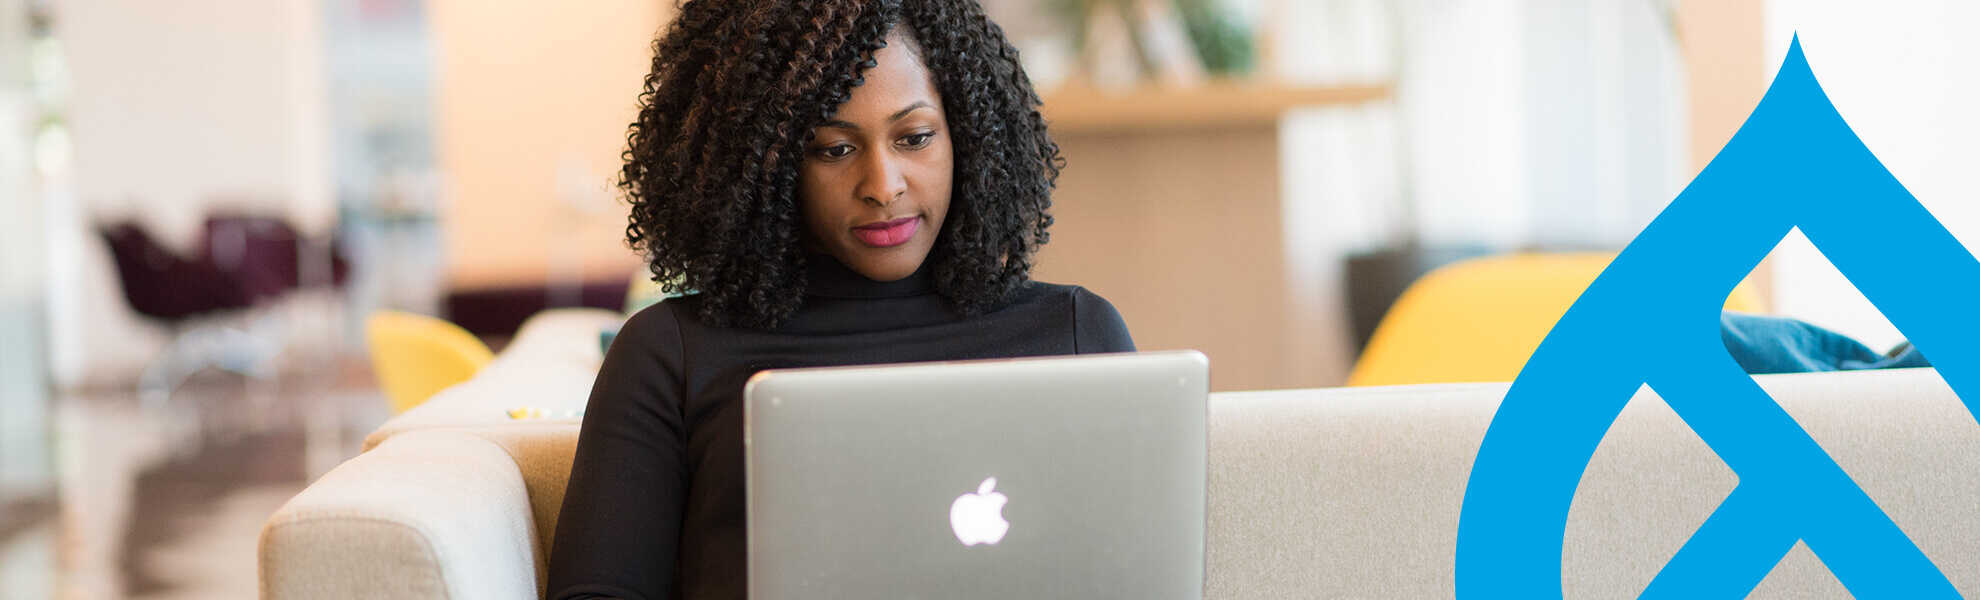 woman sitting at laptop with drupal logo